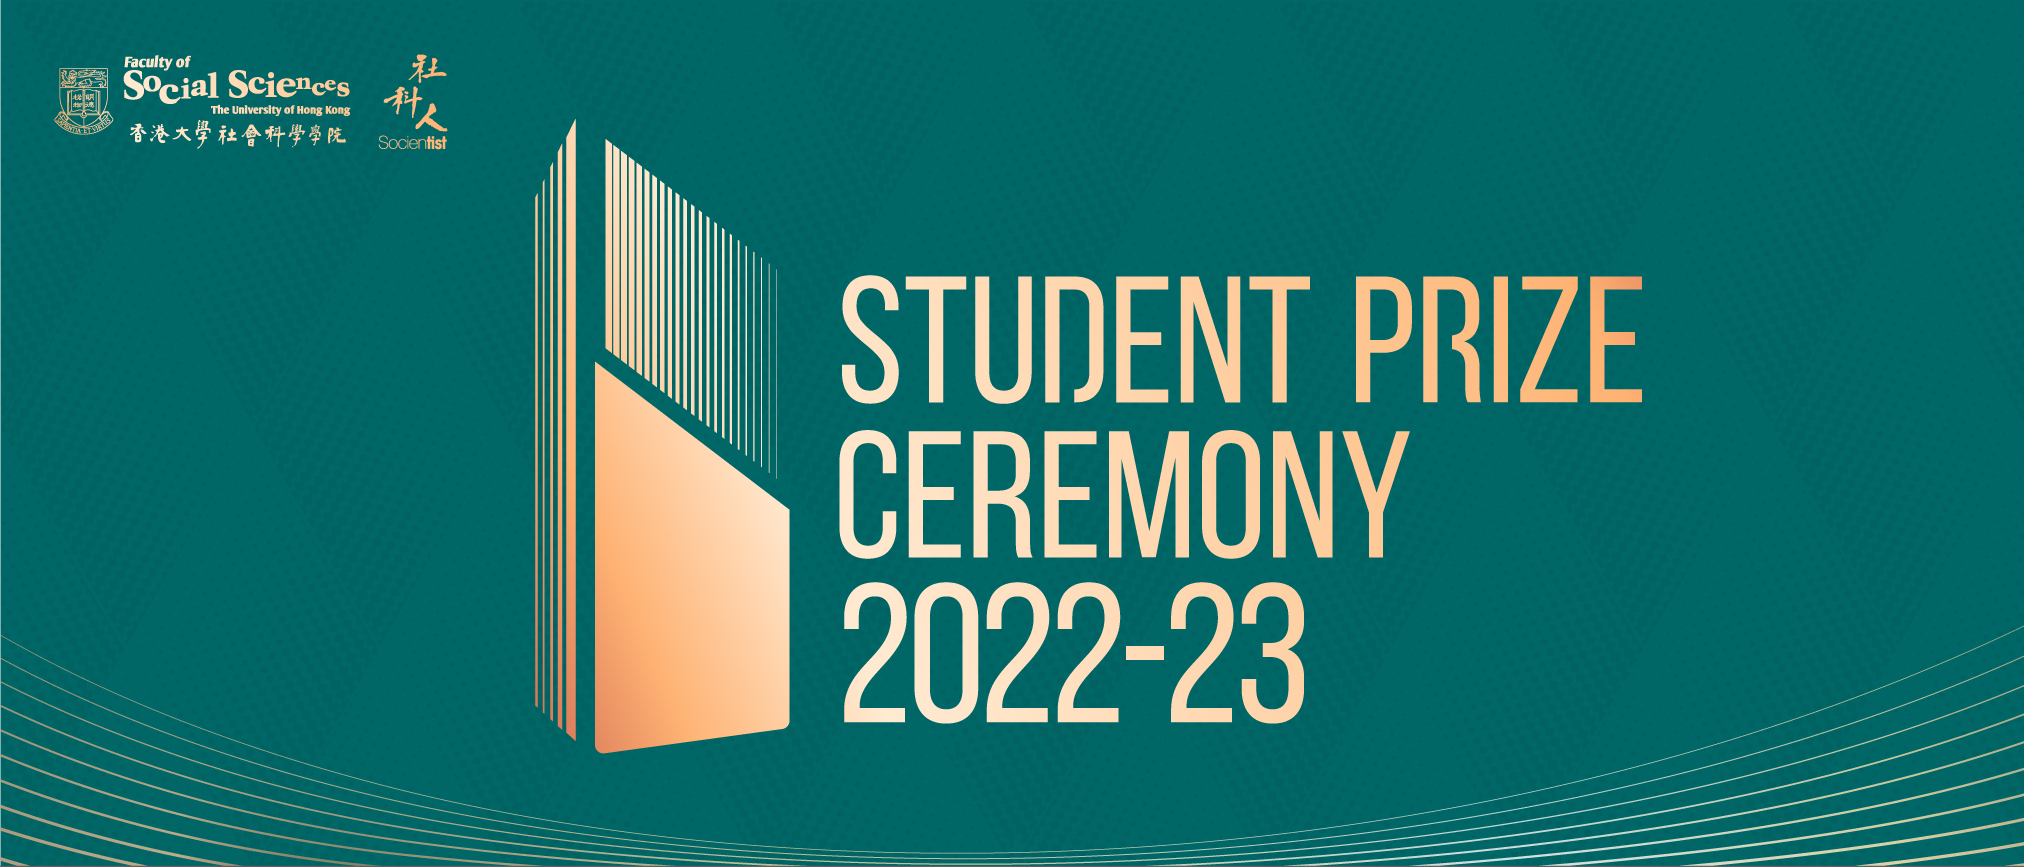 Student Prize Ceremony 2022-23